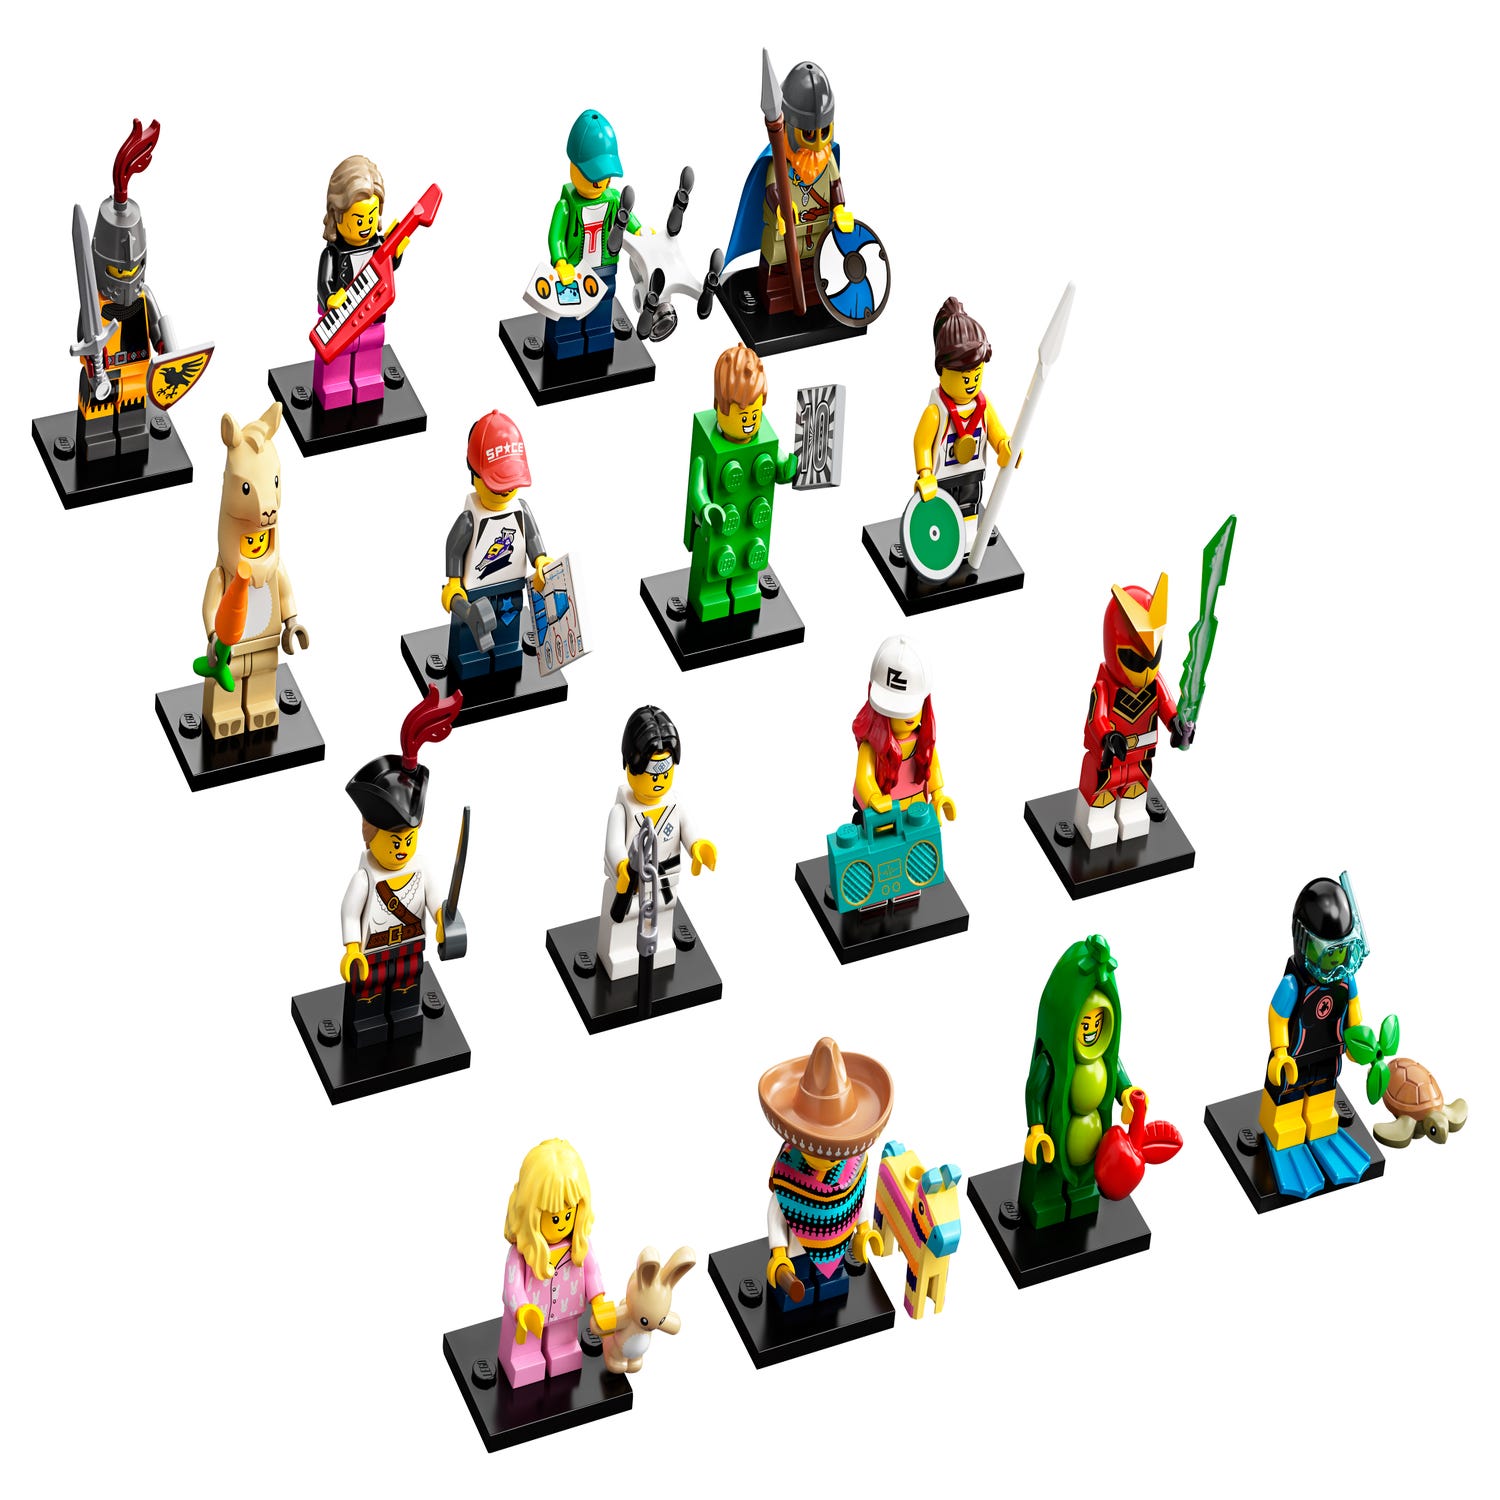 Series 20 71027 | Minifigures | Buy online at the Official LEGOÂ® Shop US